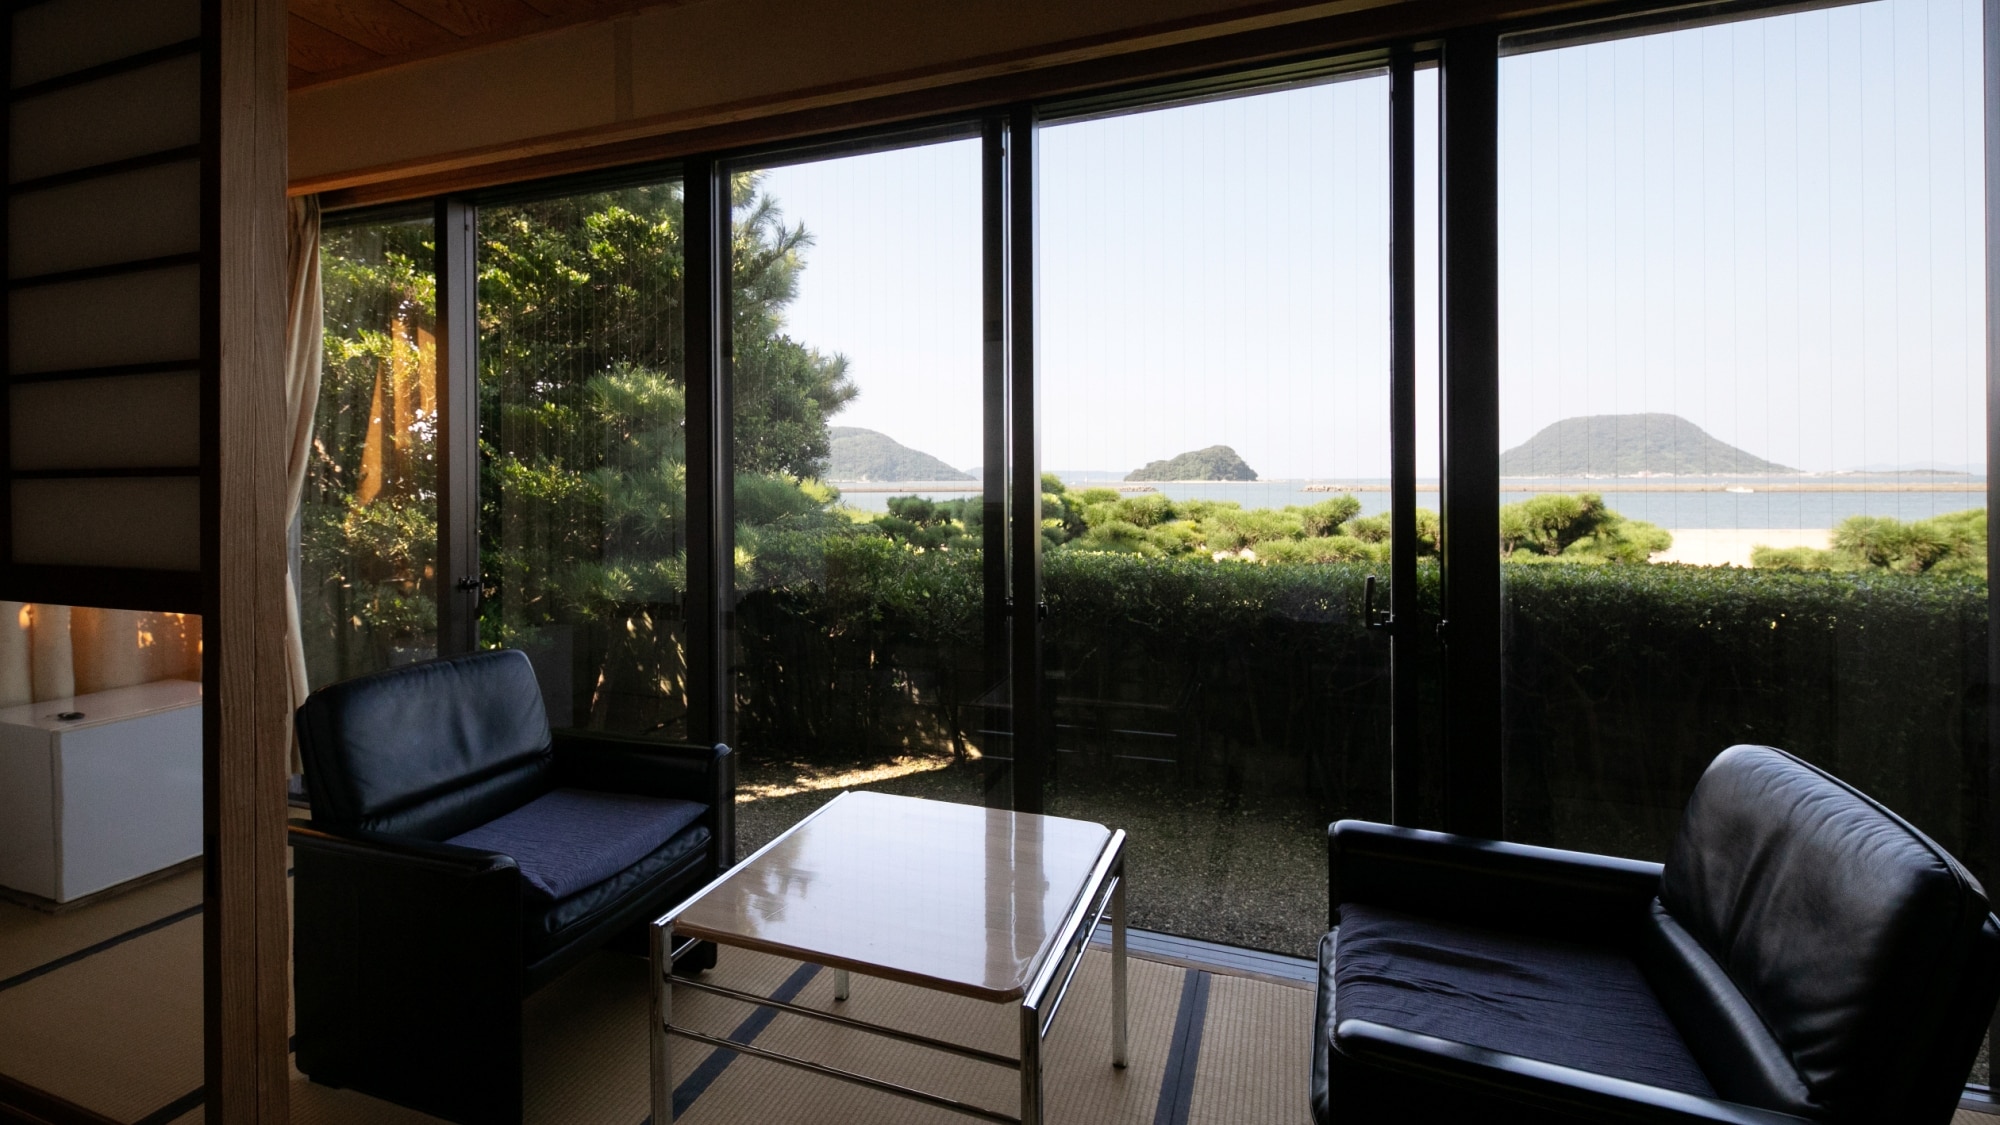 Main building 10 tatami mats / Matsuma: You can see the beautiful coast of Nishinohama outside the window.